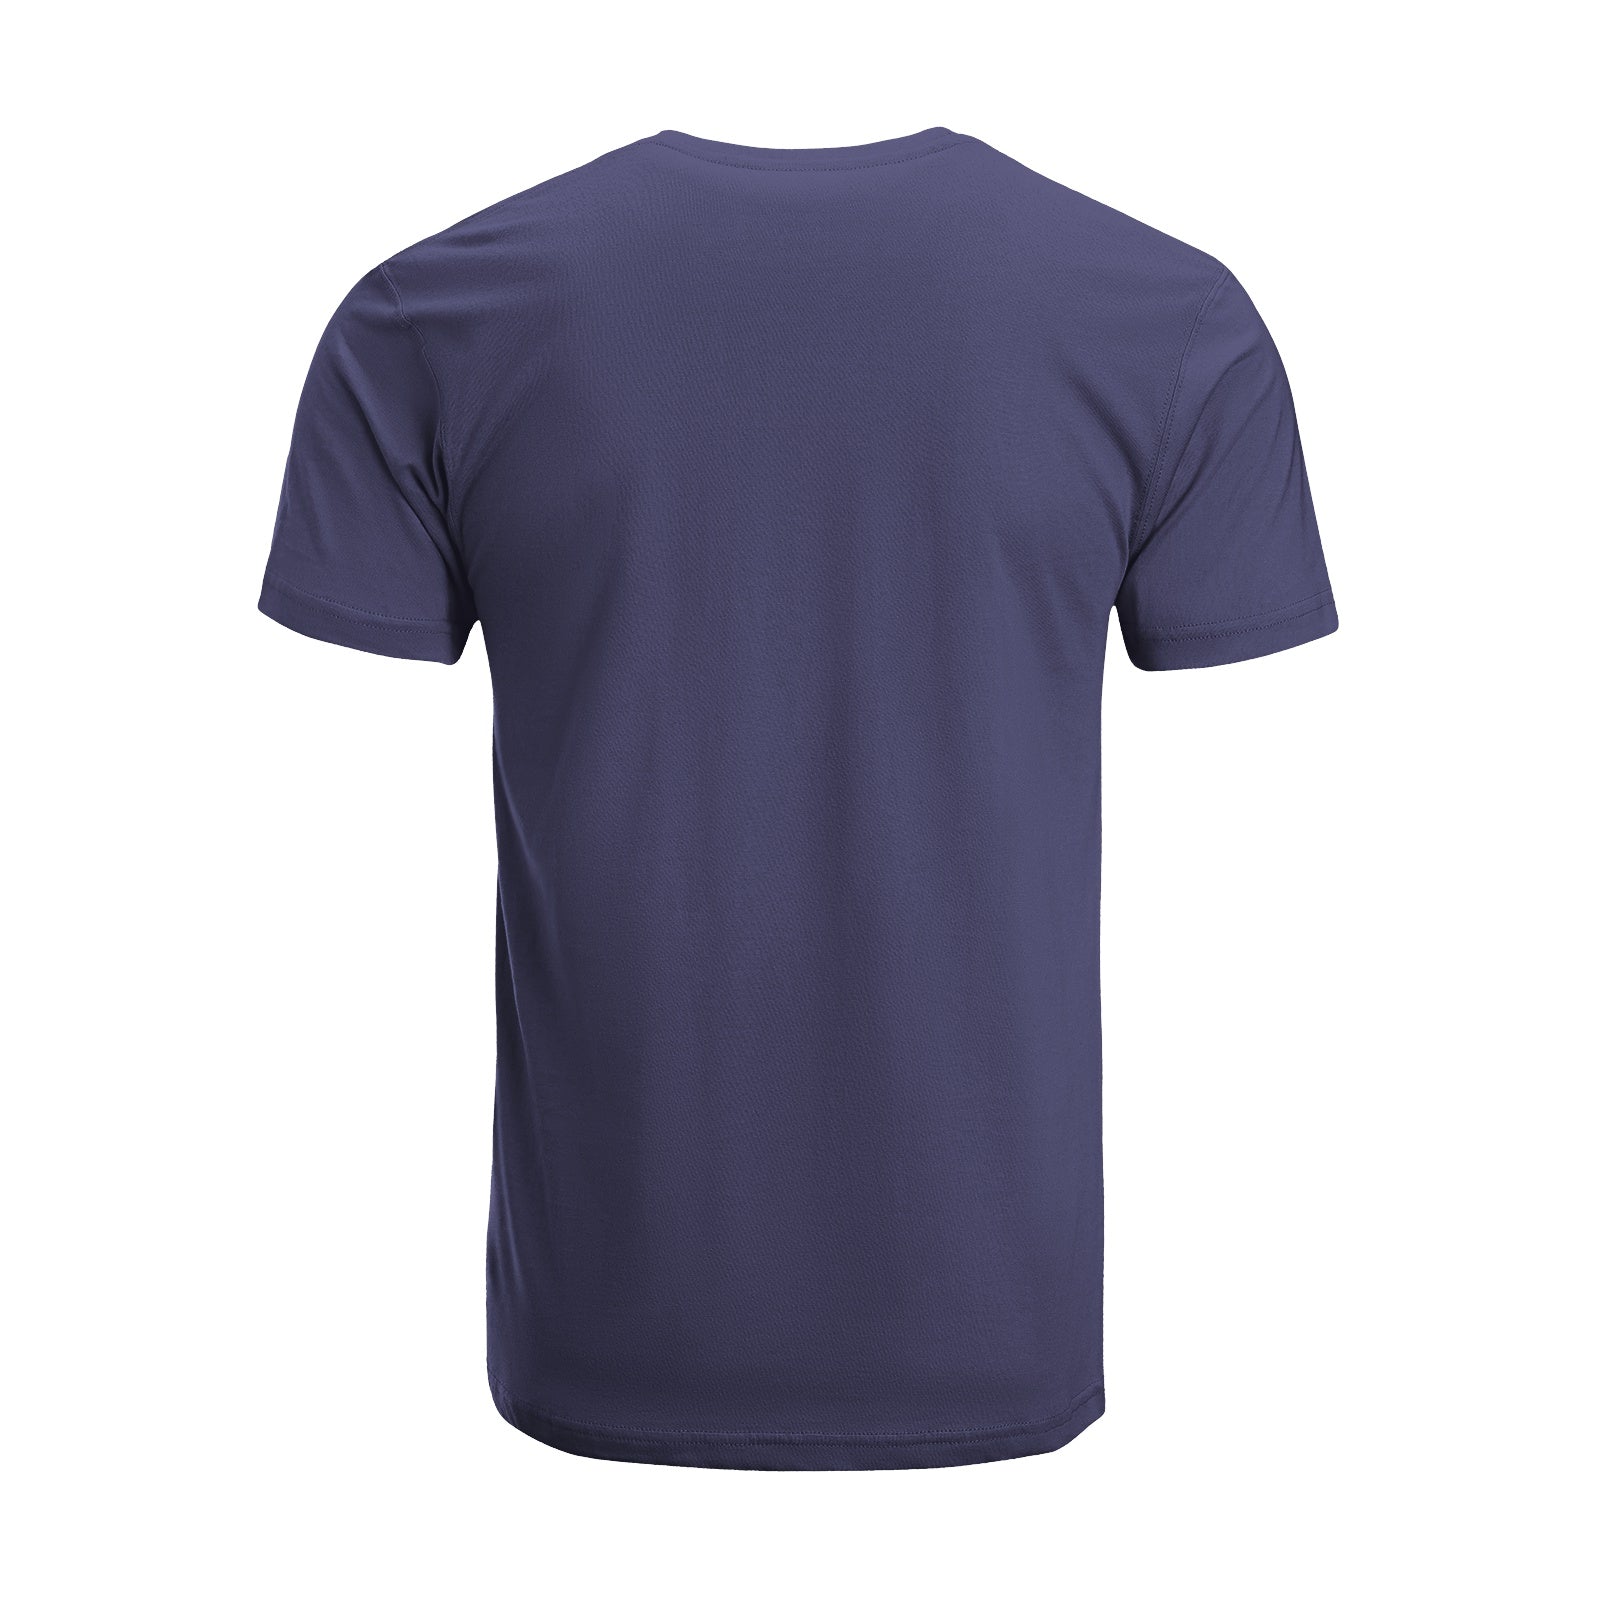 Unisex Short Sleeve Crew Neck Cotton Jersey T-Shirt Gym No. 37 - Tara-Outfits.com